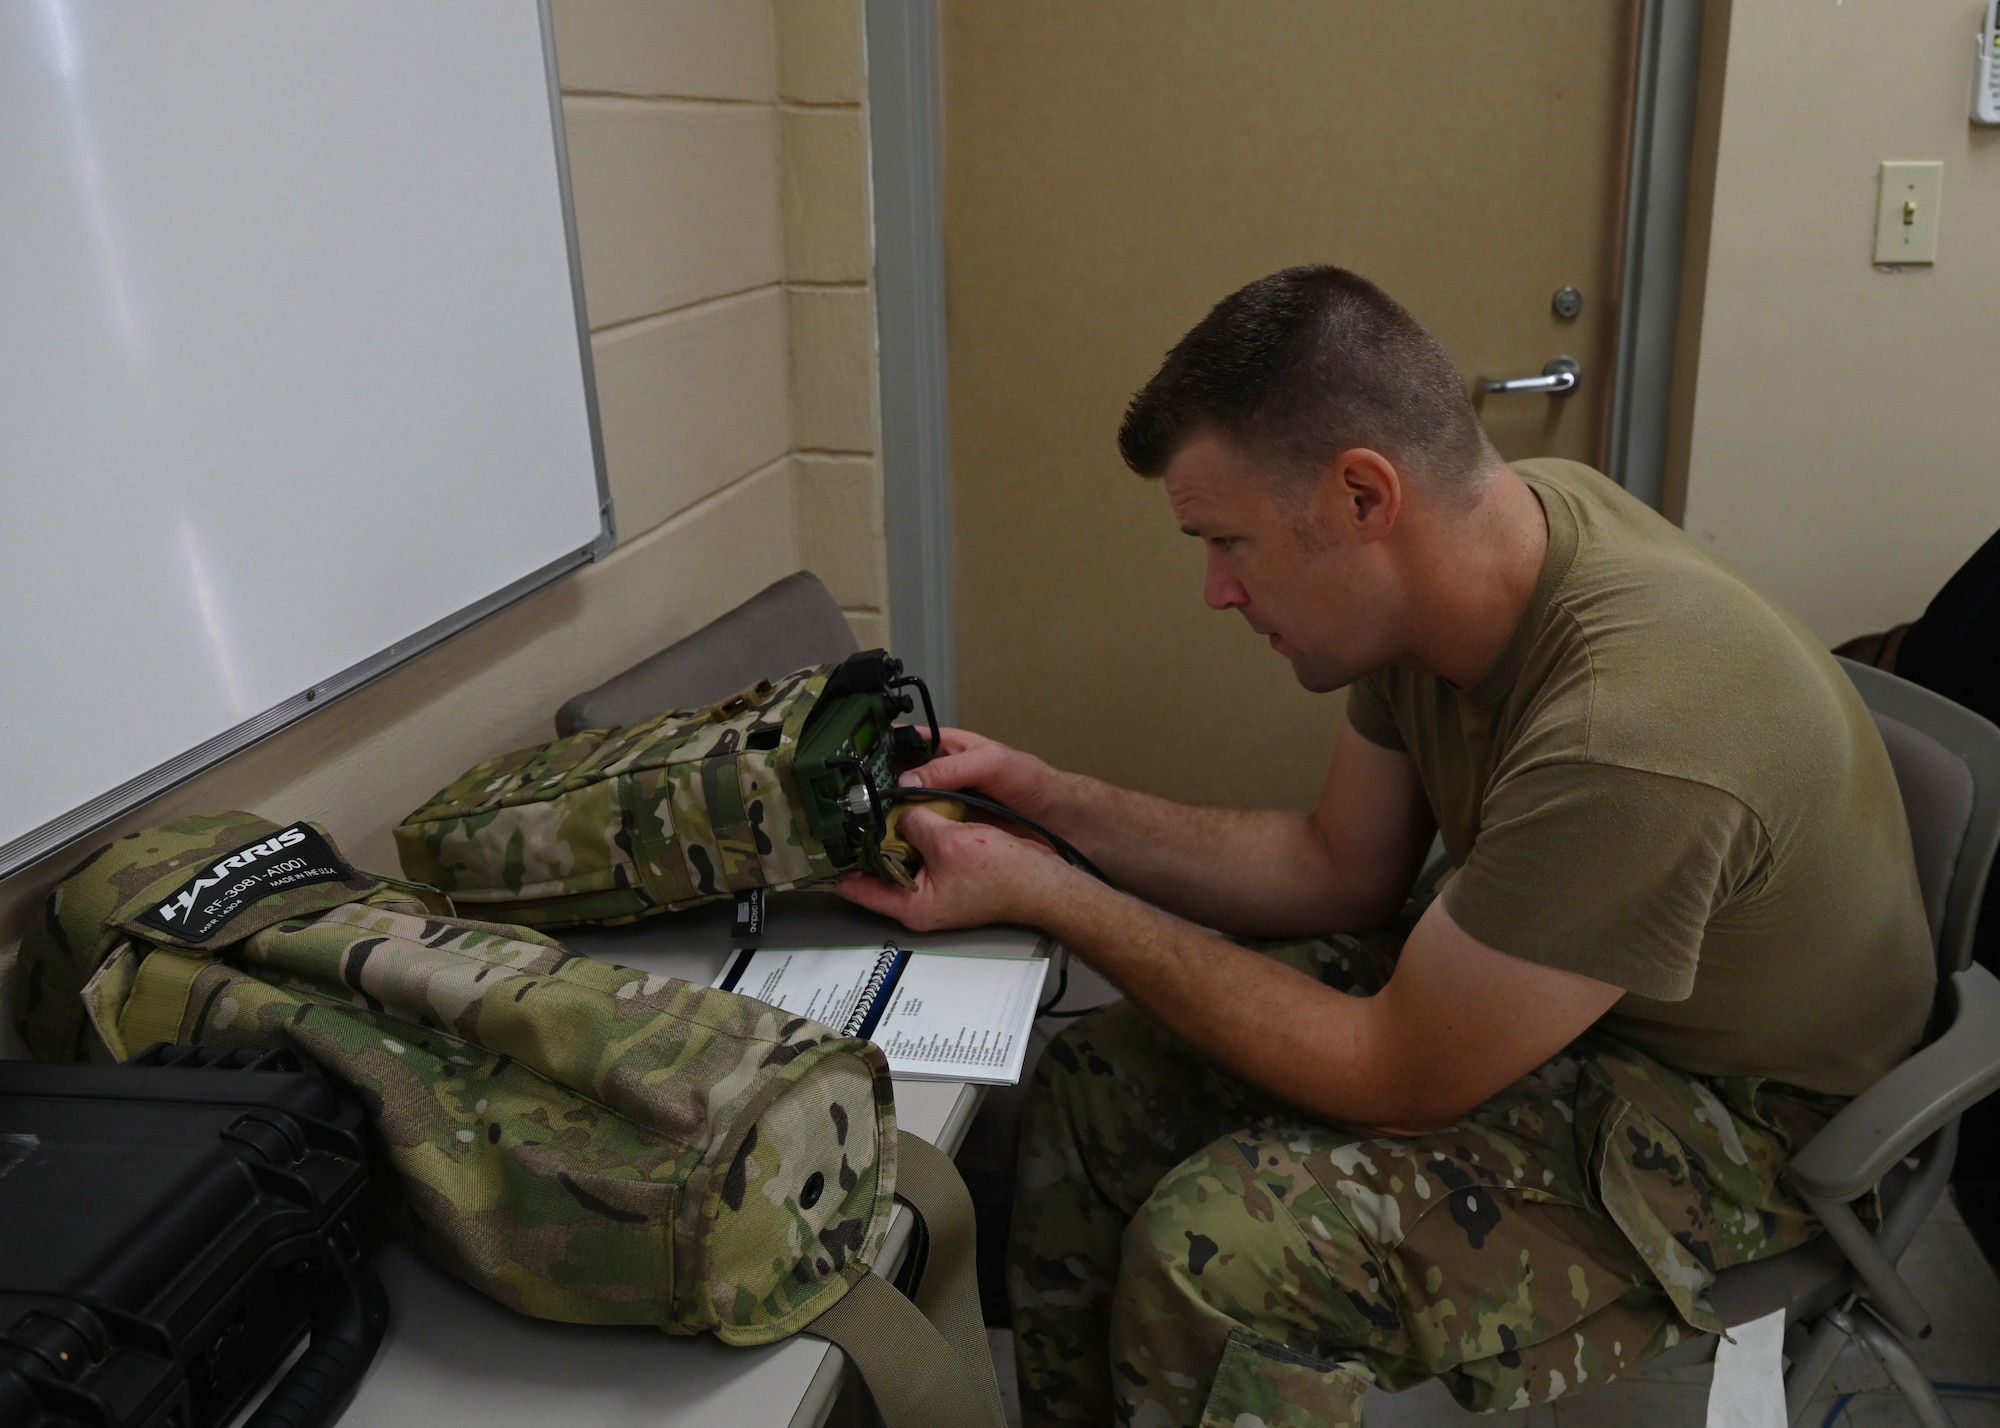 a man wearing a military uniform sets up communications equipment inside a building